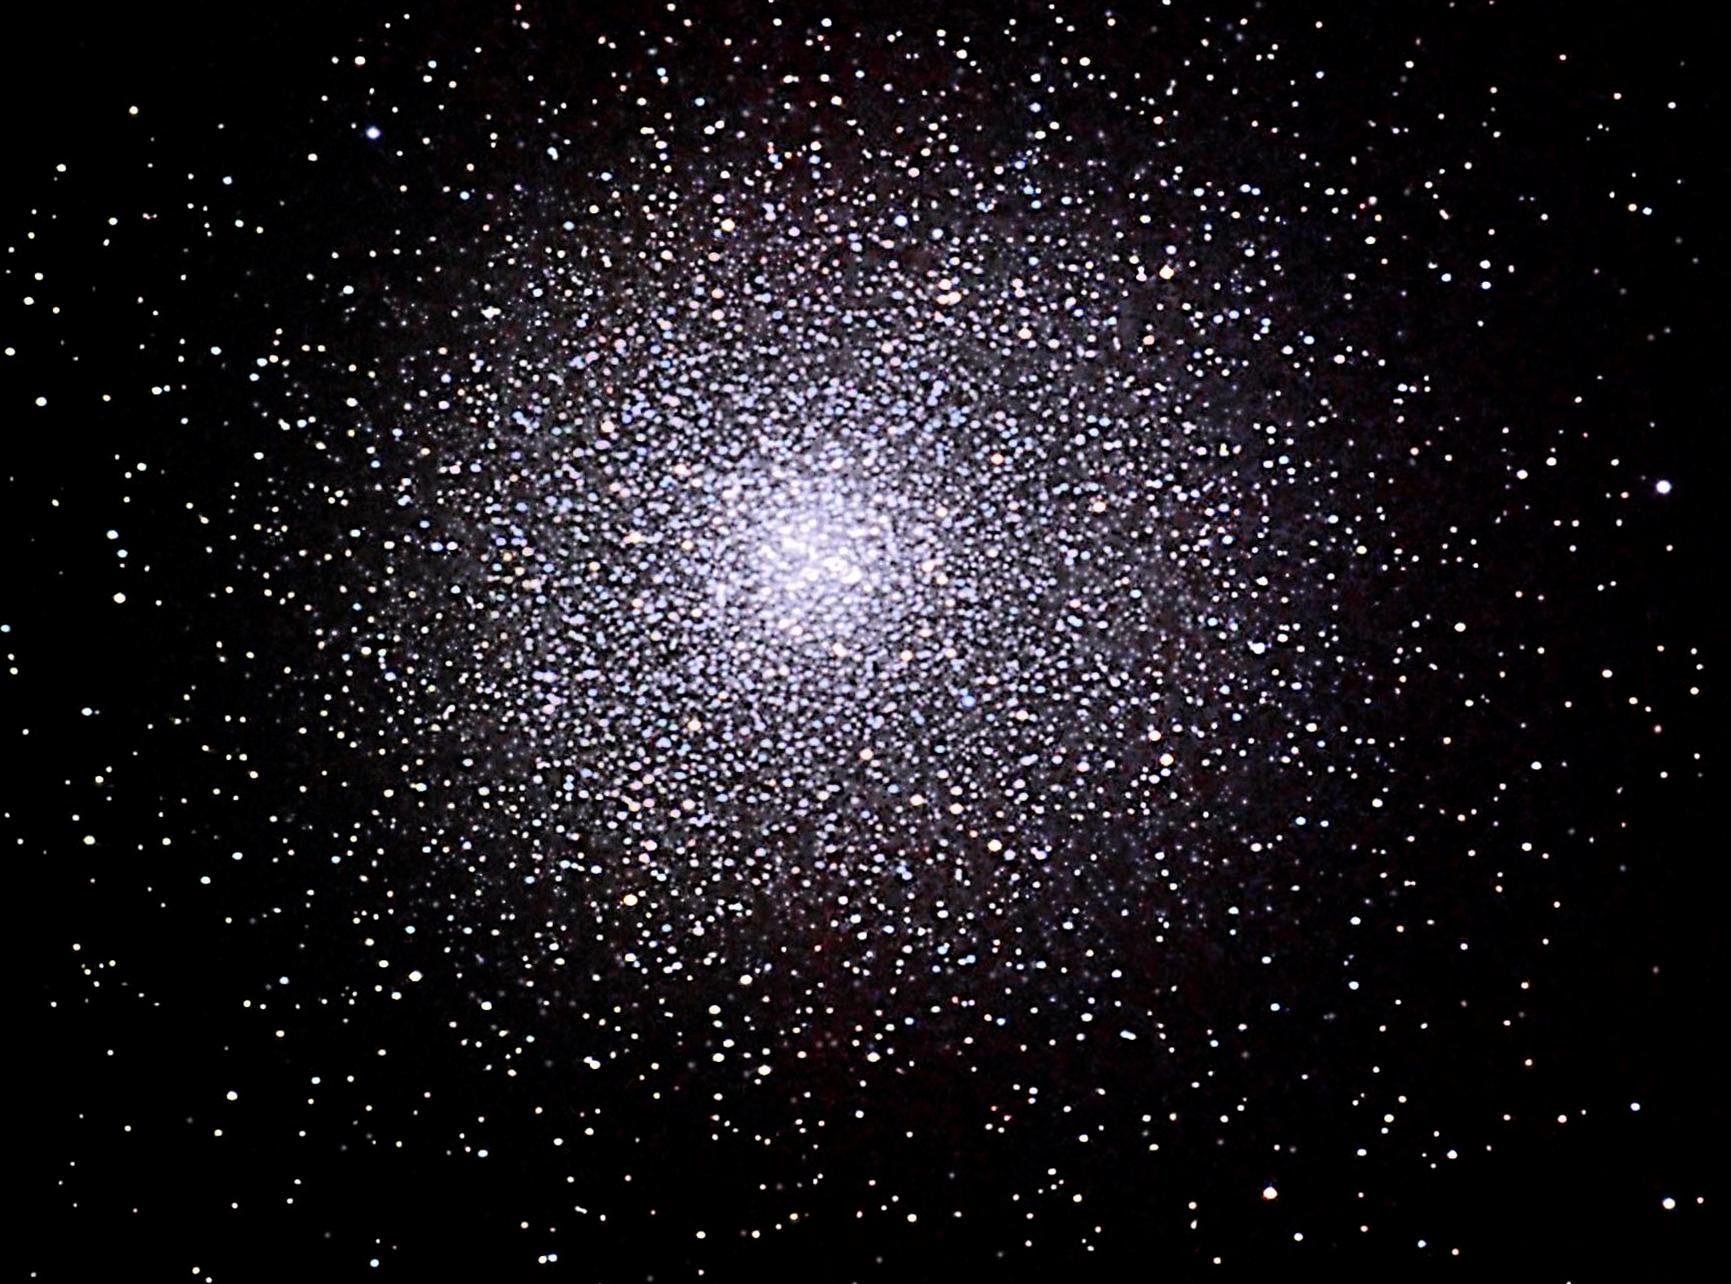 Ammasso stellare M13